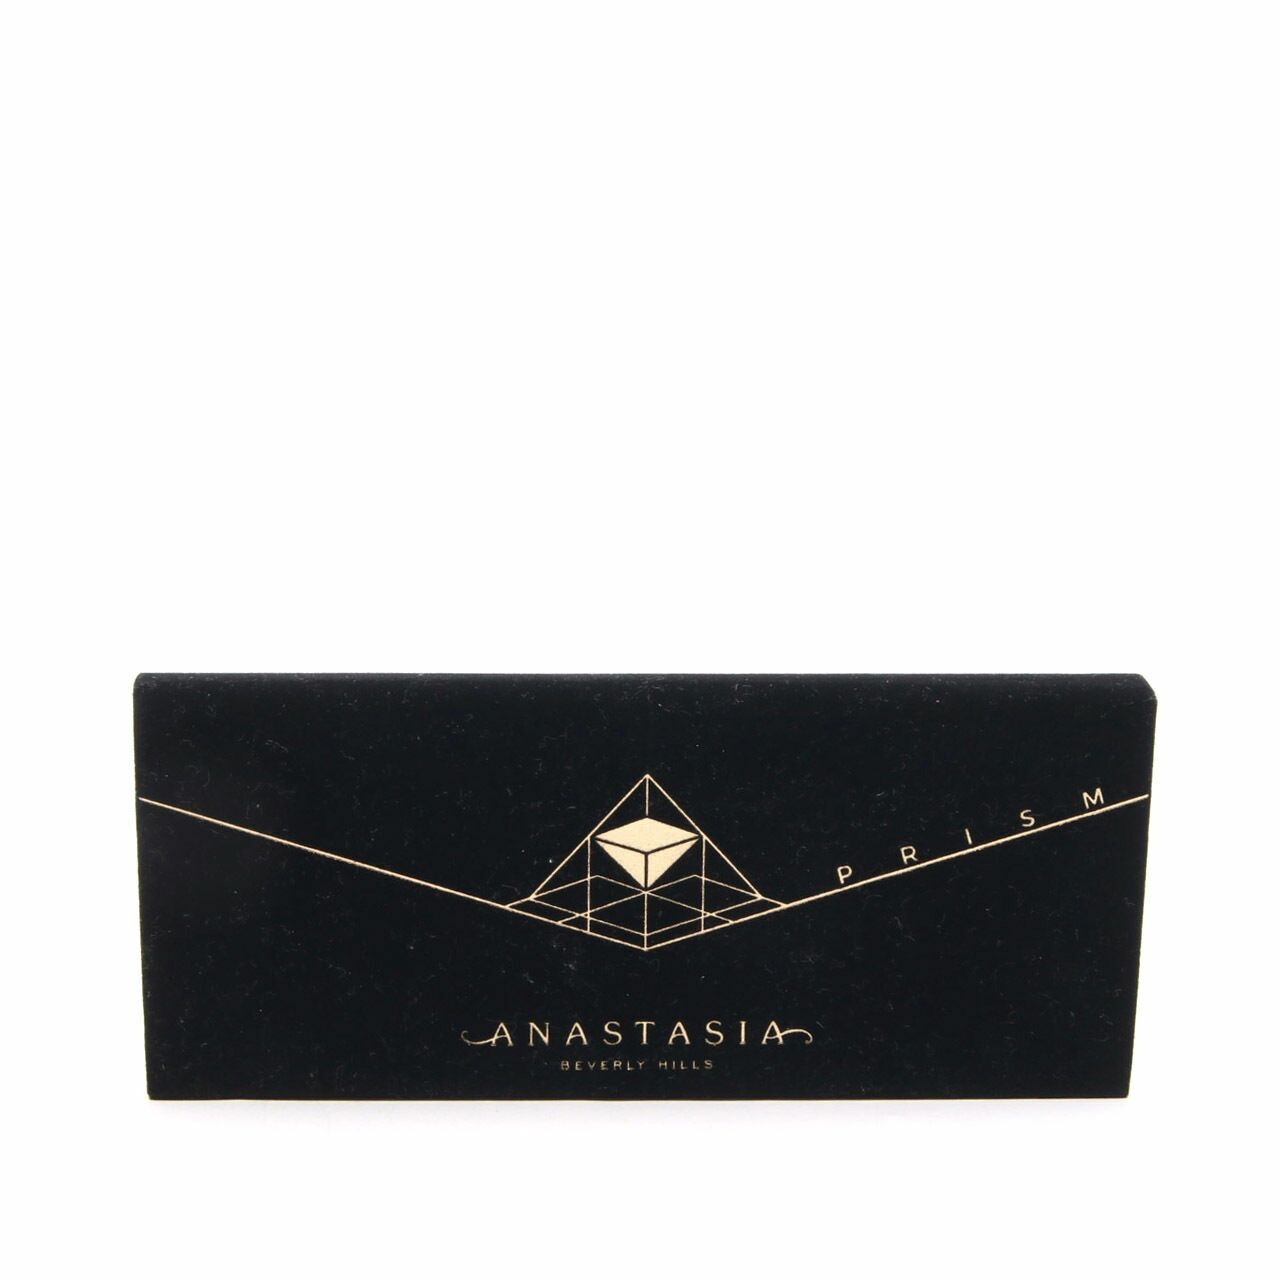 Anastasia Beverly Hills Prism Eyeshadow Palette Sets and Palette